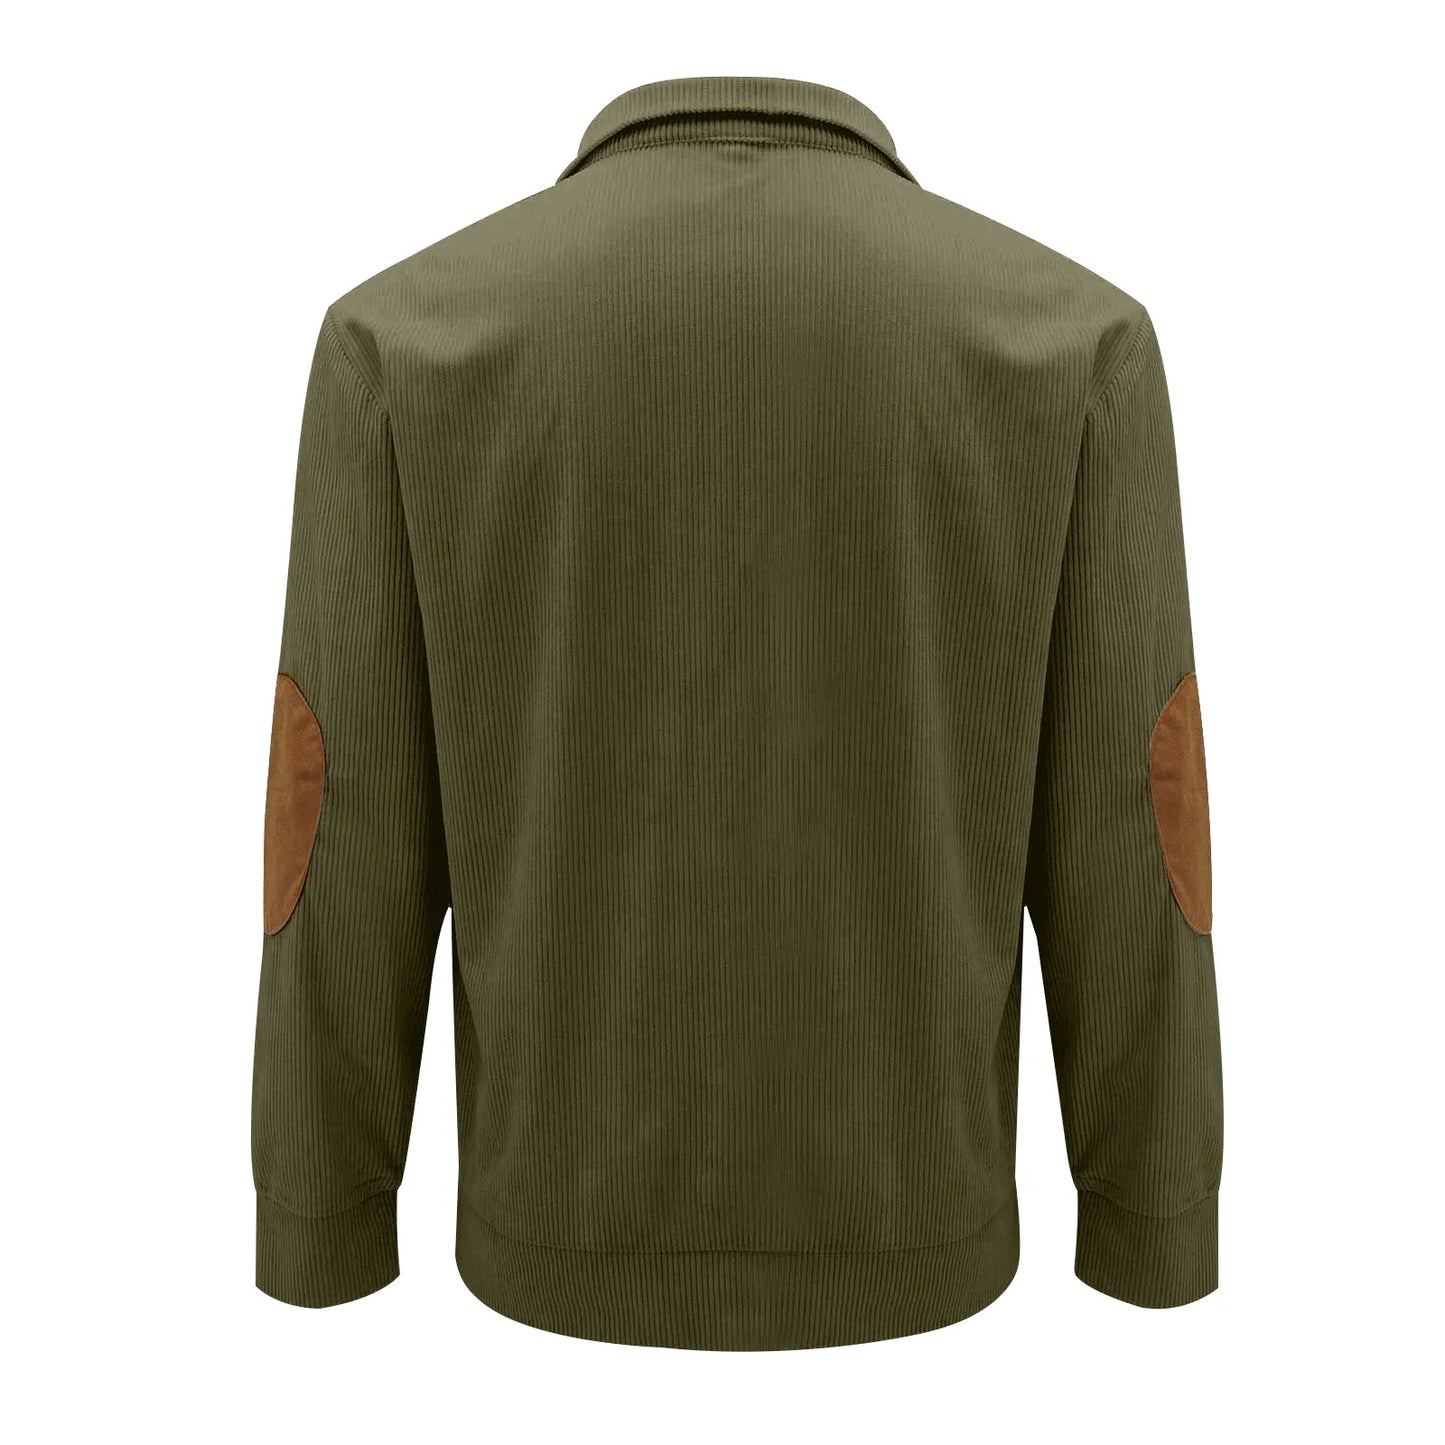 Men's Outdoor Casual Stand Collar Long Sleeve Shirt